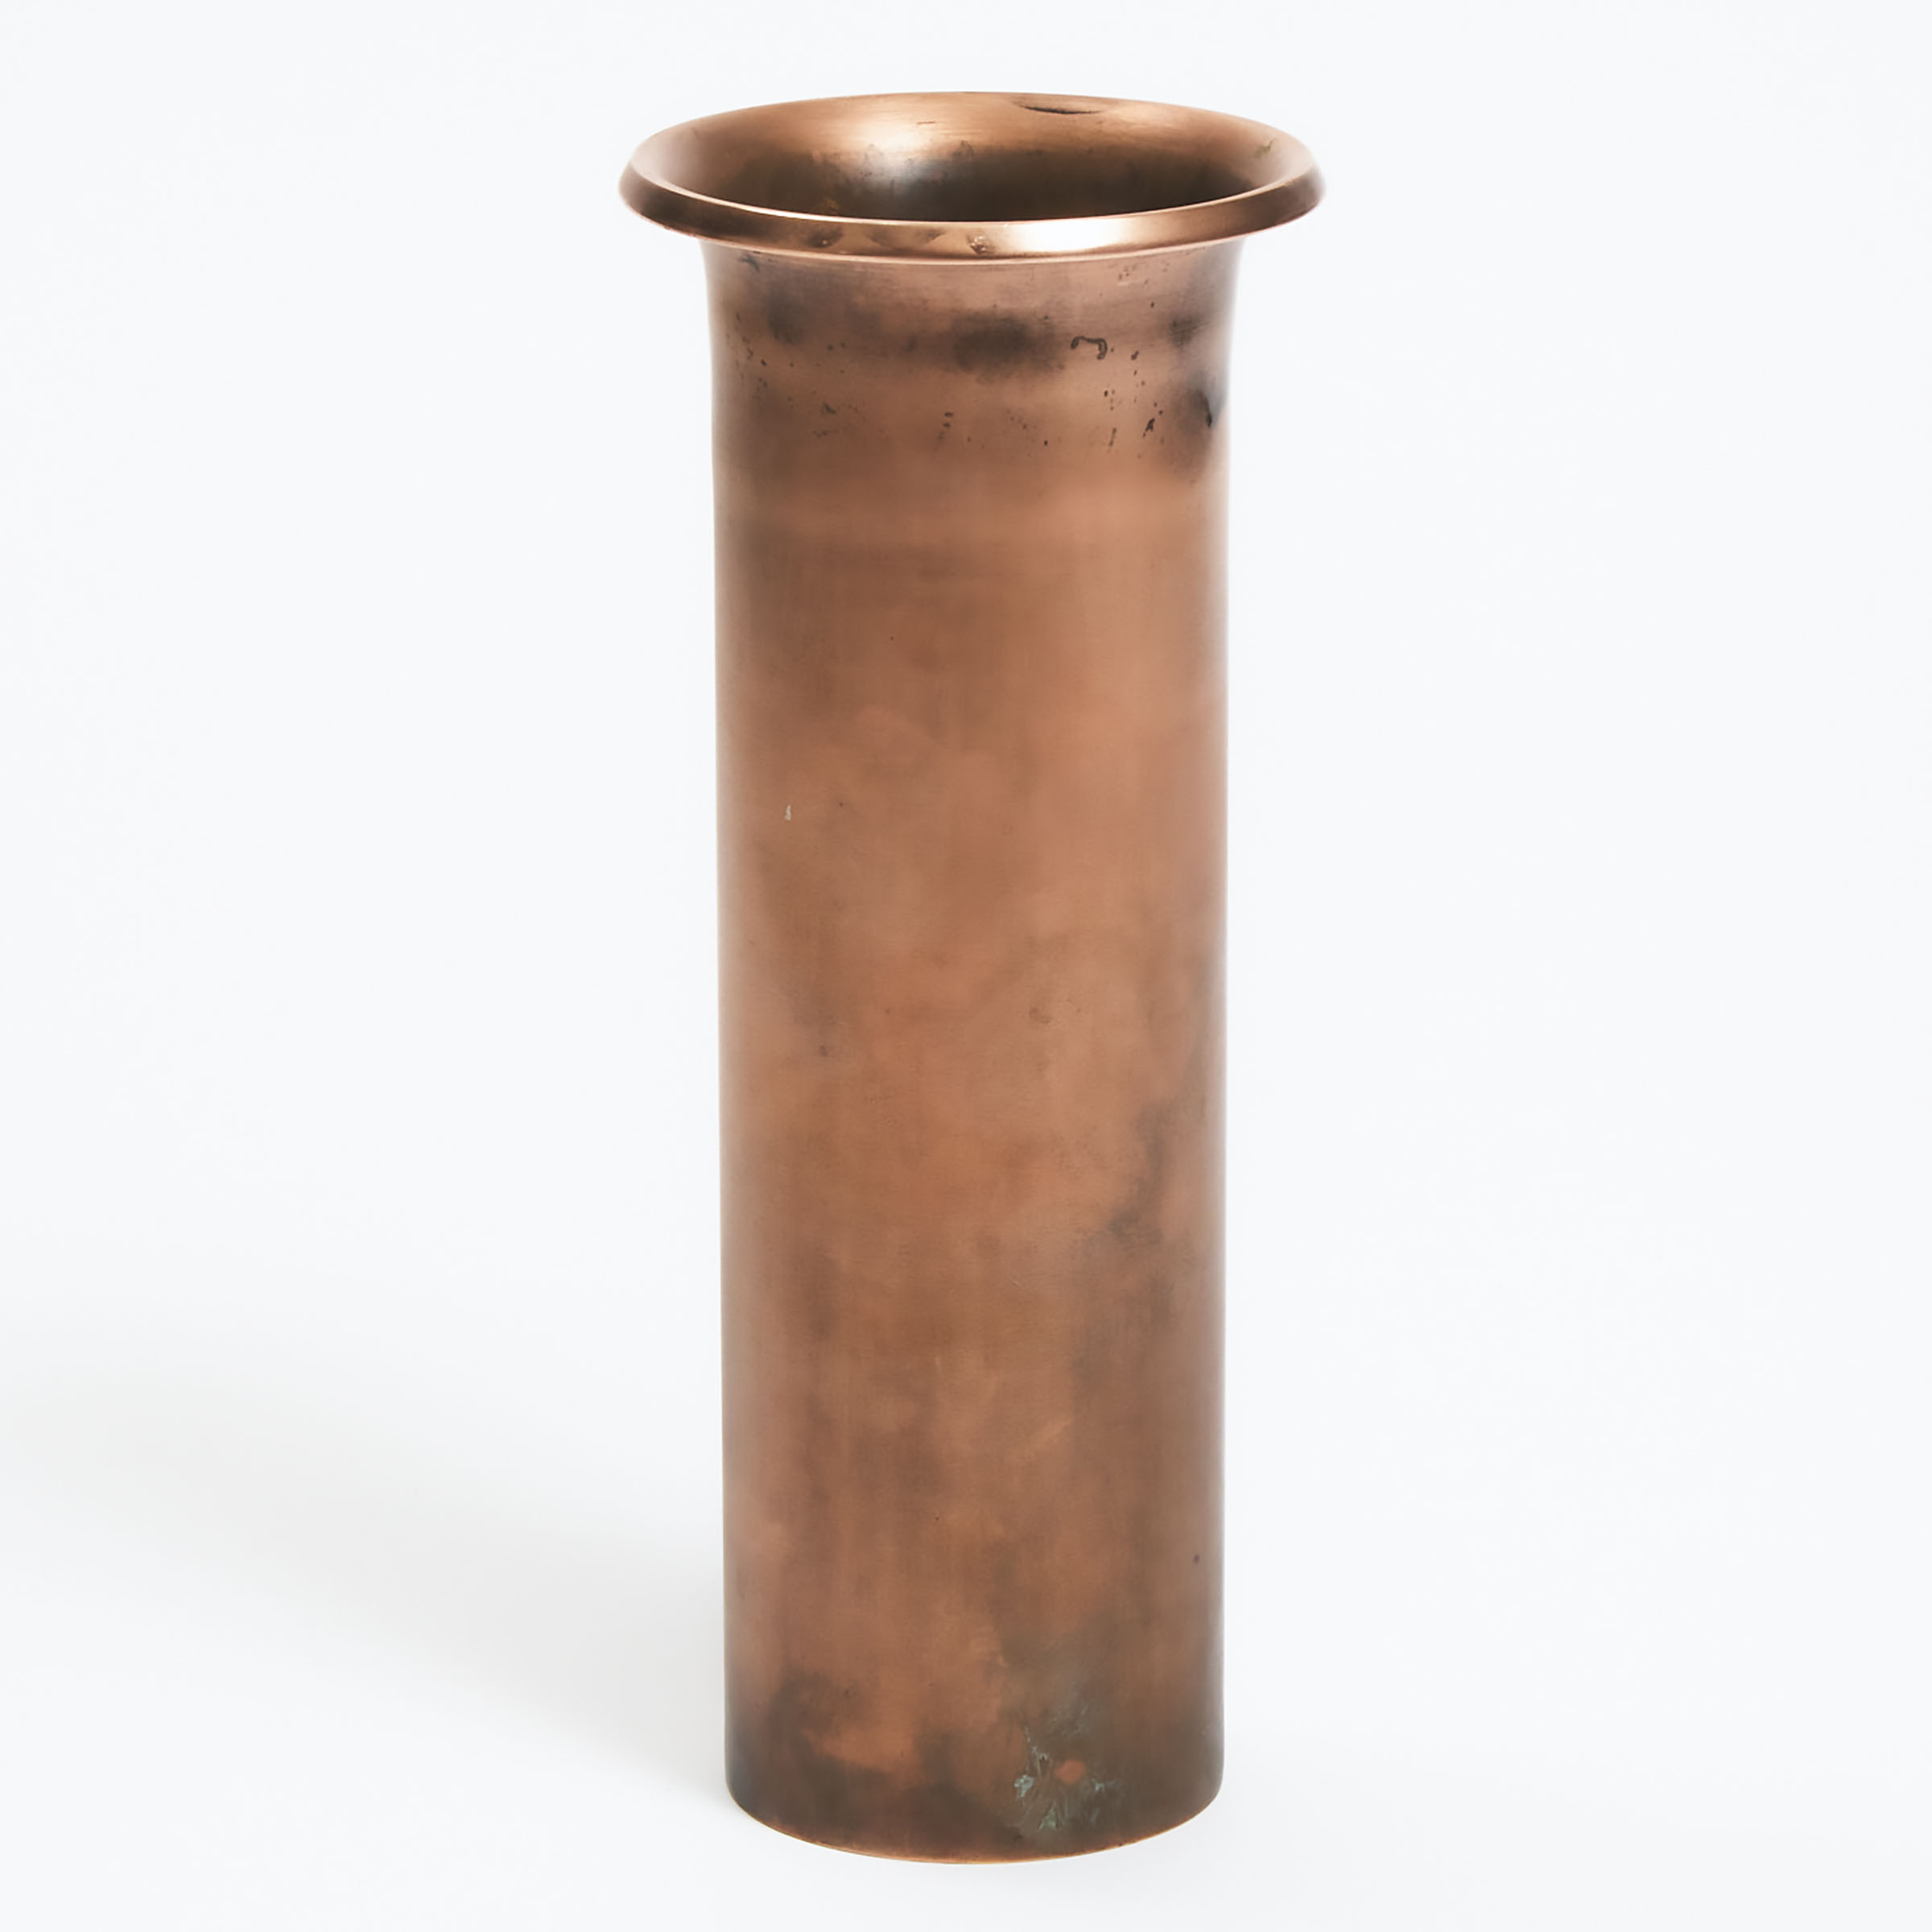 American Silver Overlaid Bronze 'Gothic' Vase, Heinz Art Metal, 1912